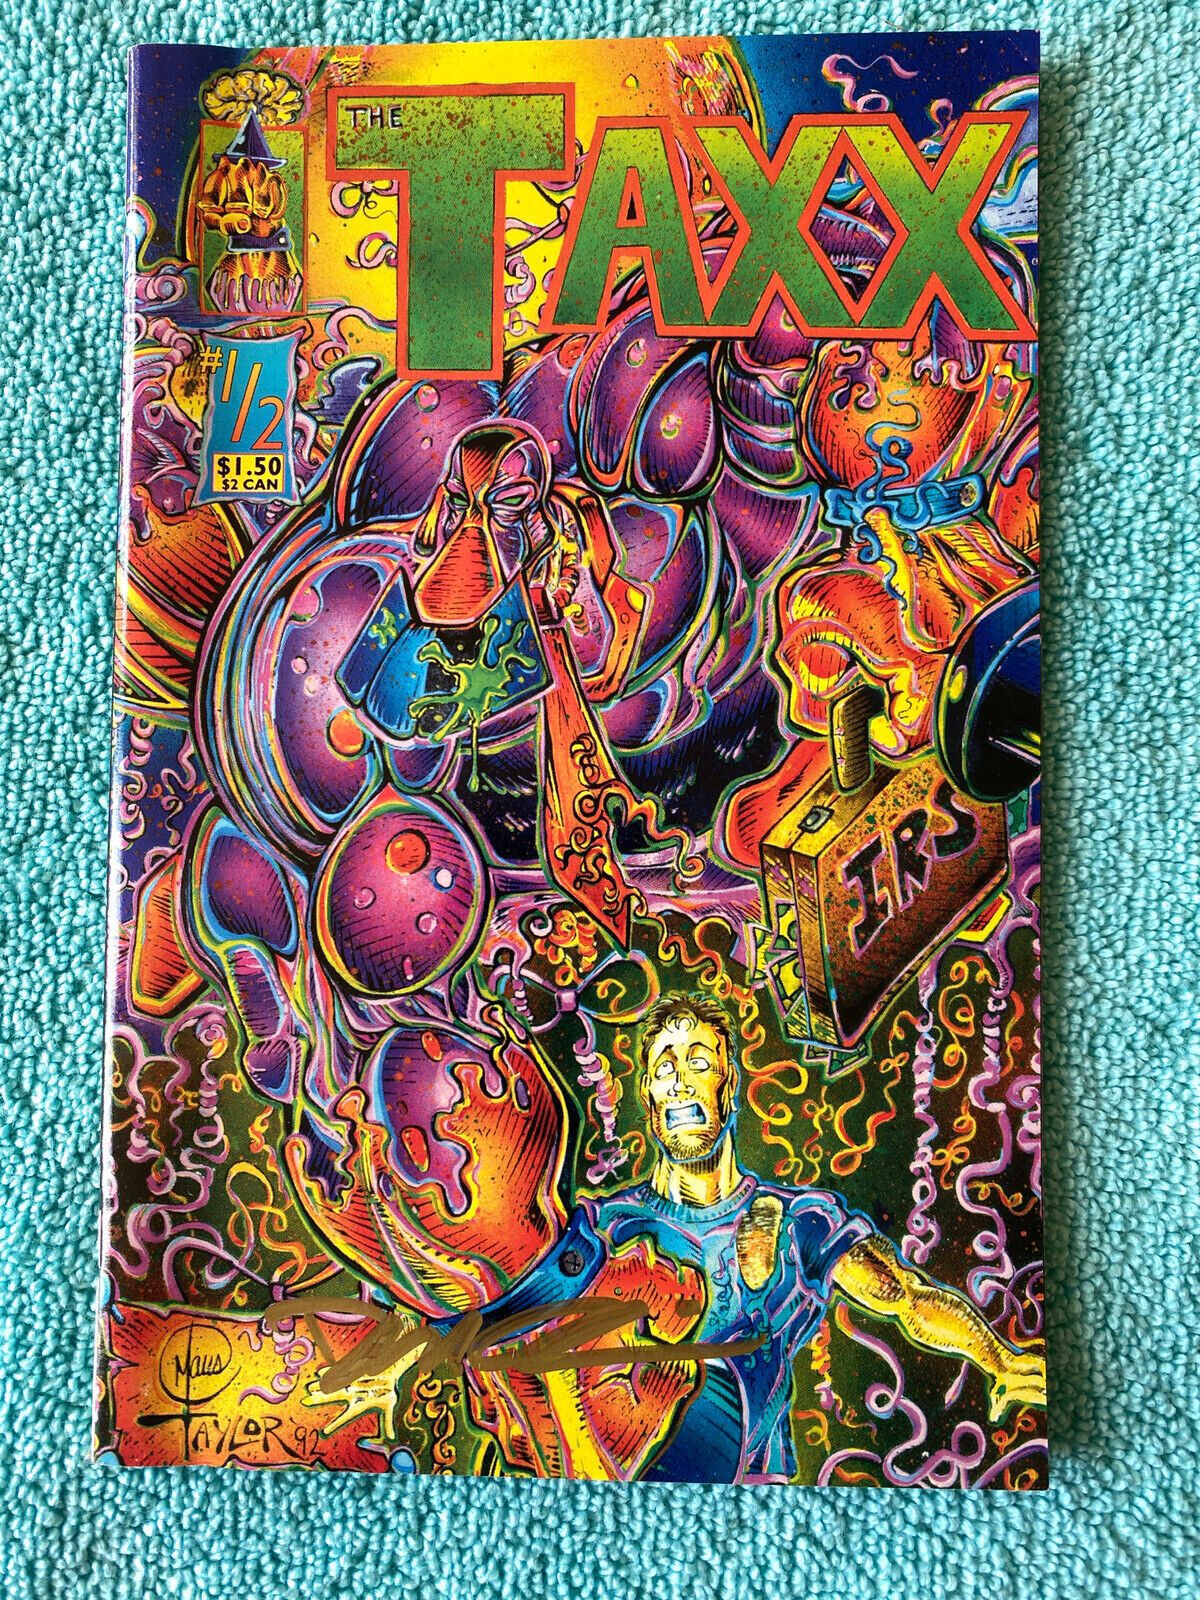 THE TAXX #1/2 (1996) Parody Press, Spoofs Sam Kieth MAXX, VF, Signed By DON CHIN